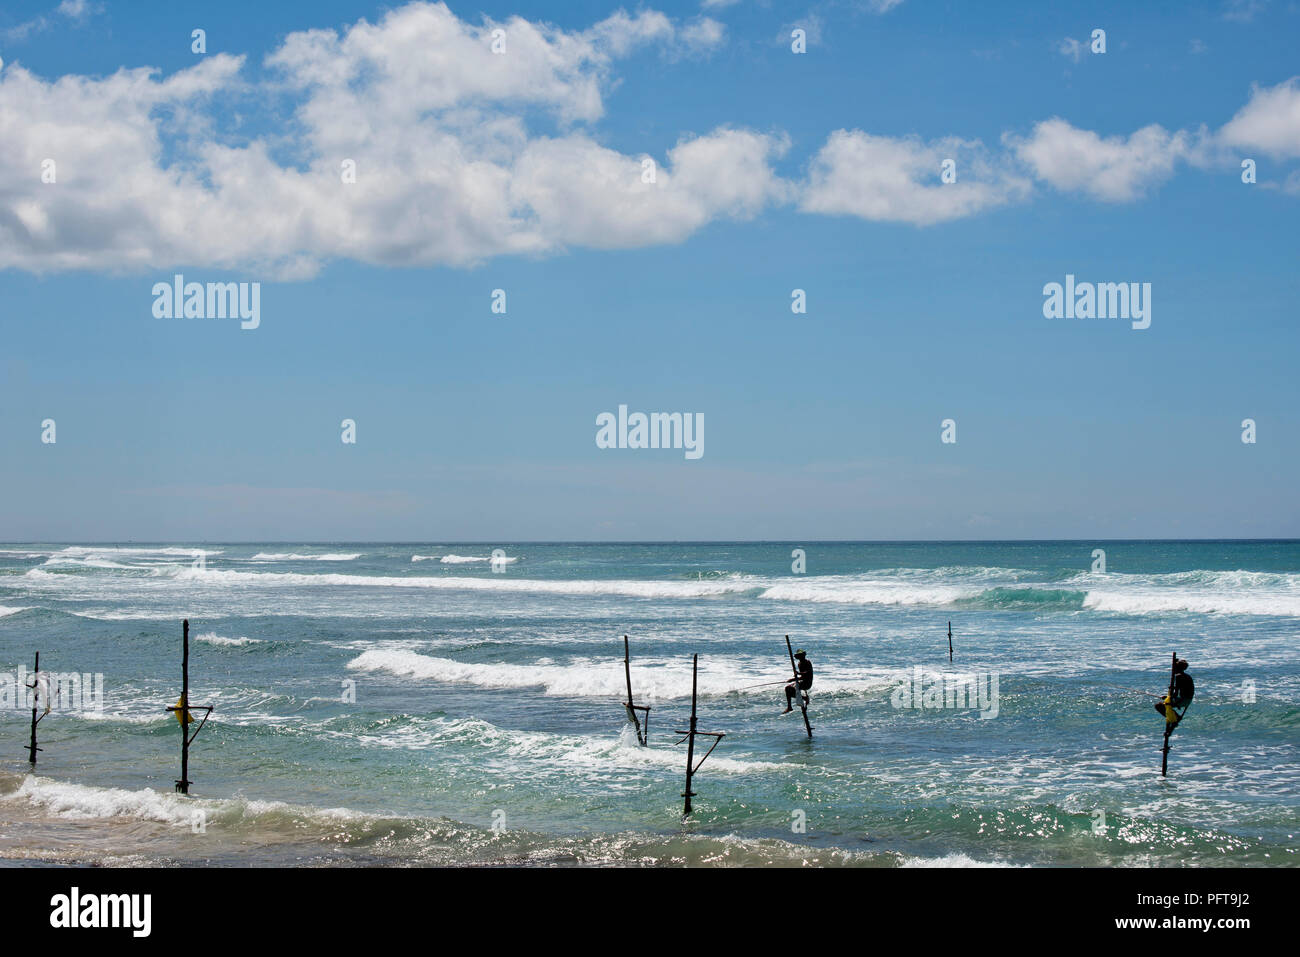 Sri Lanka, Southern Province, Midigama, stilt fishermen fishing in sea Stock Photo